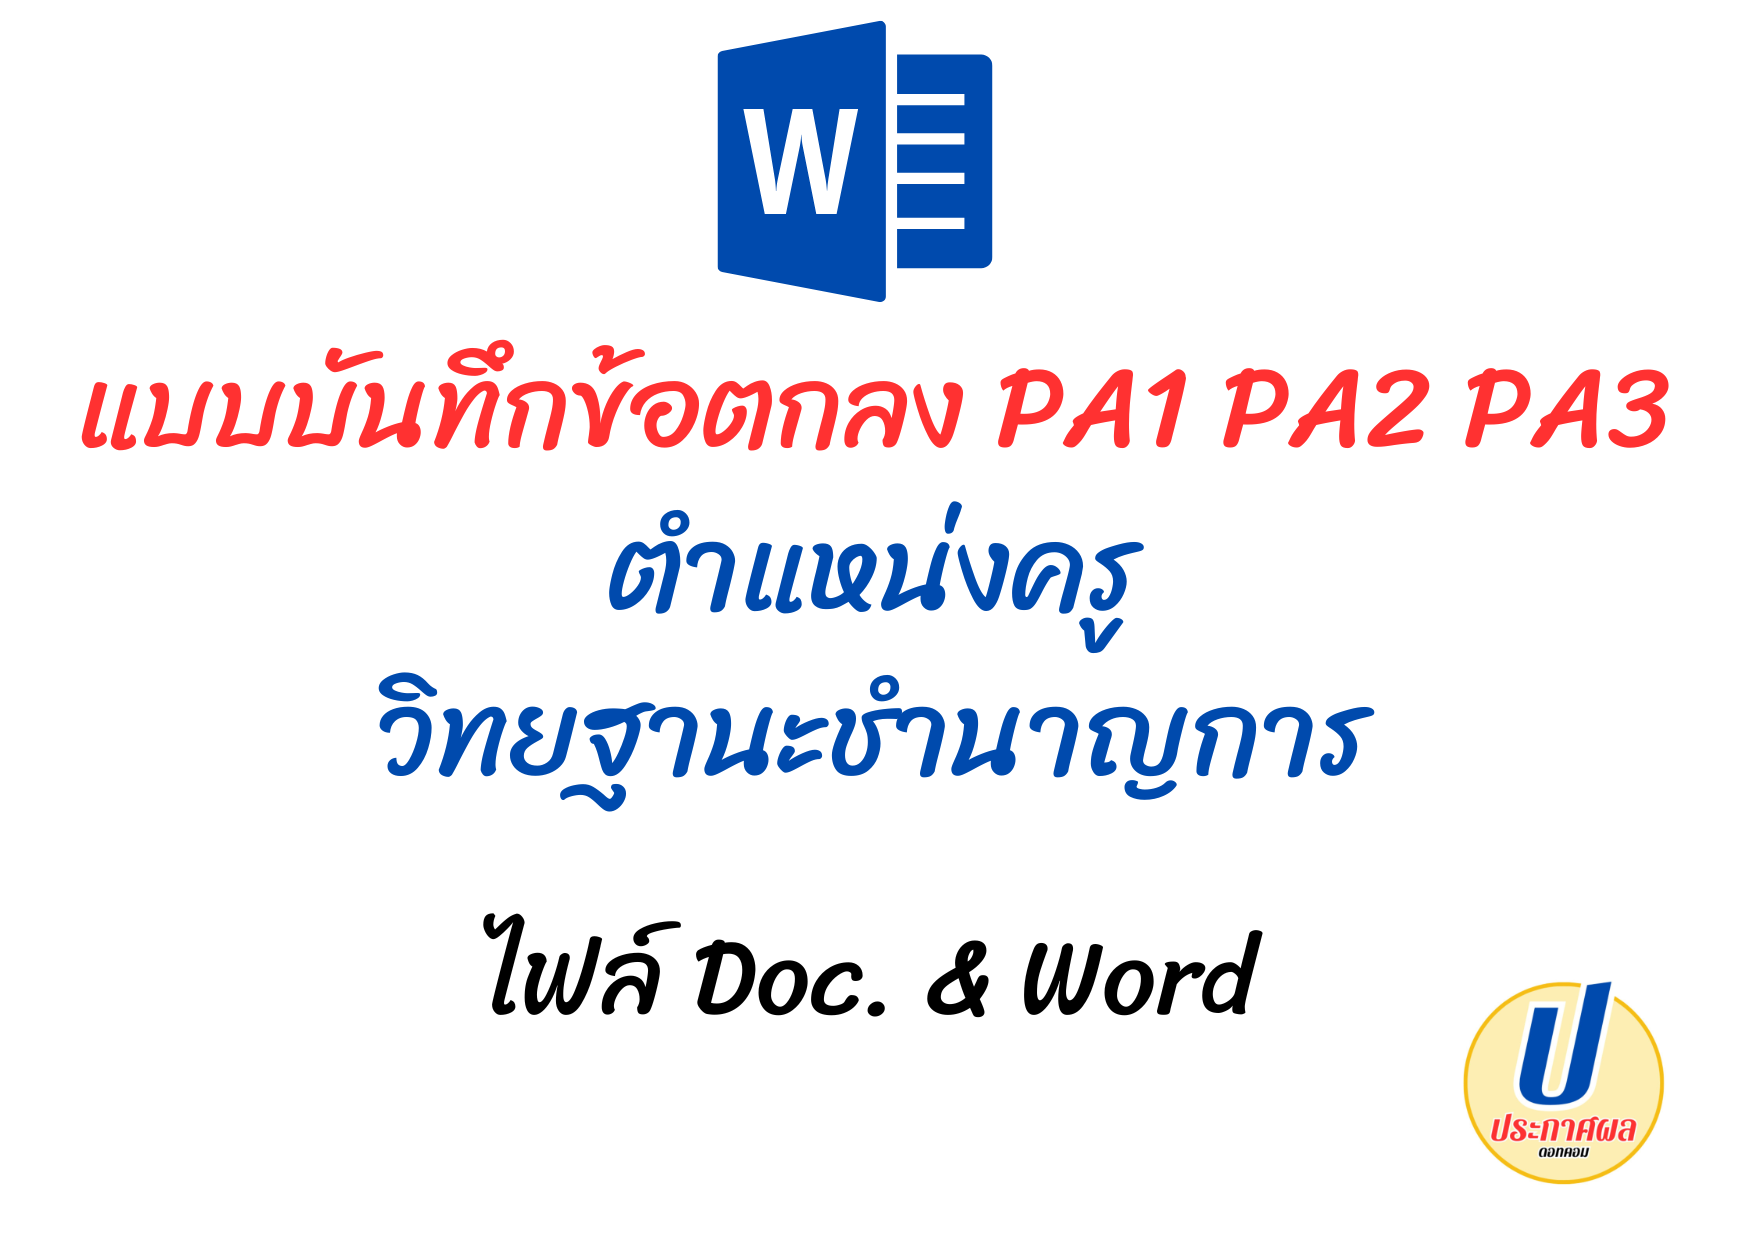 PA1 PA2 PA3 แบบบันทึกข้อตกลง ตำแหน่งครู วิทยฐานะ ชำนาญการ ไฟล์ doc & word 